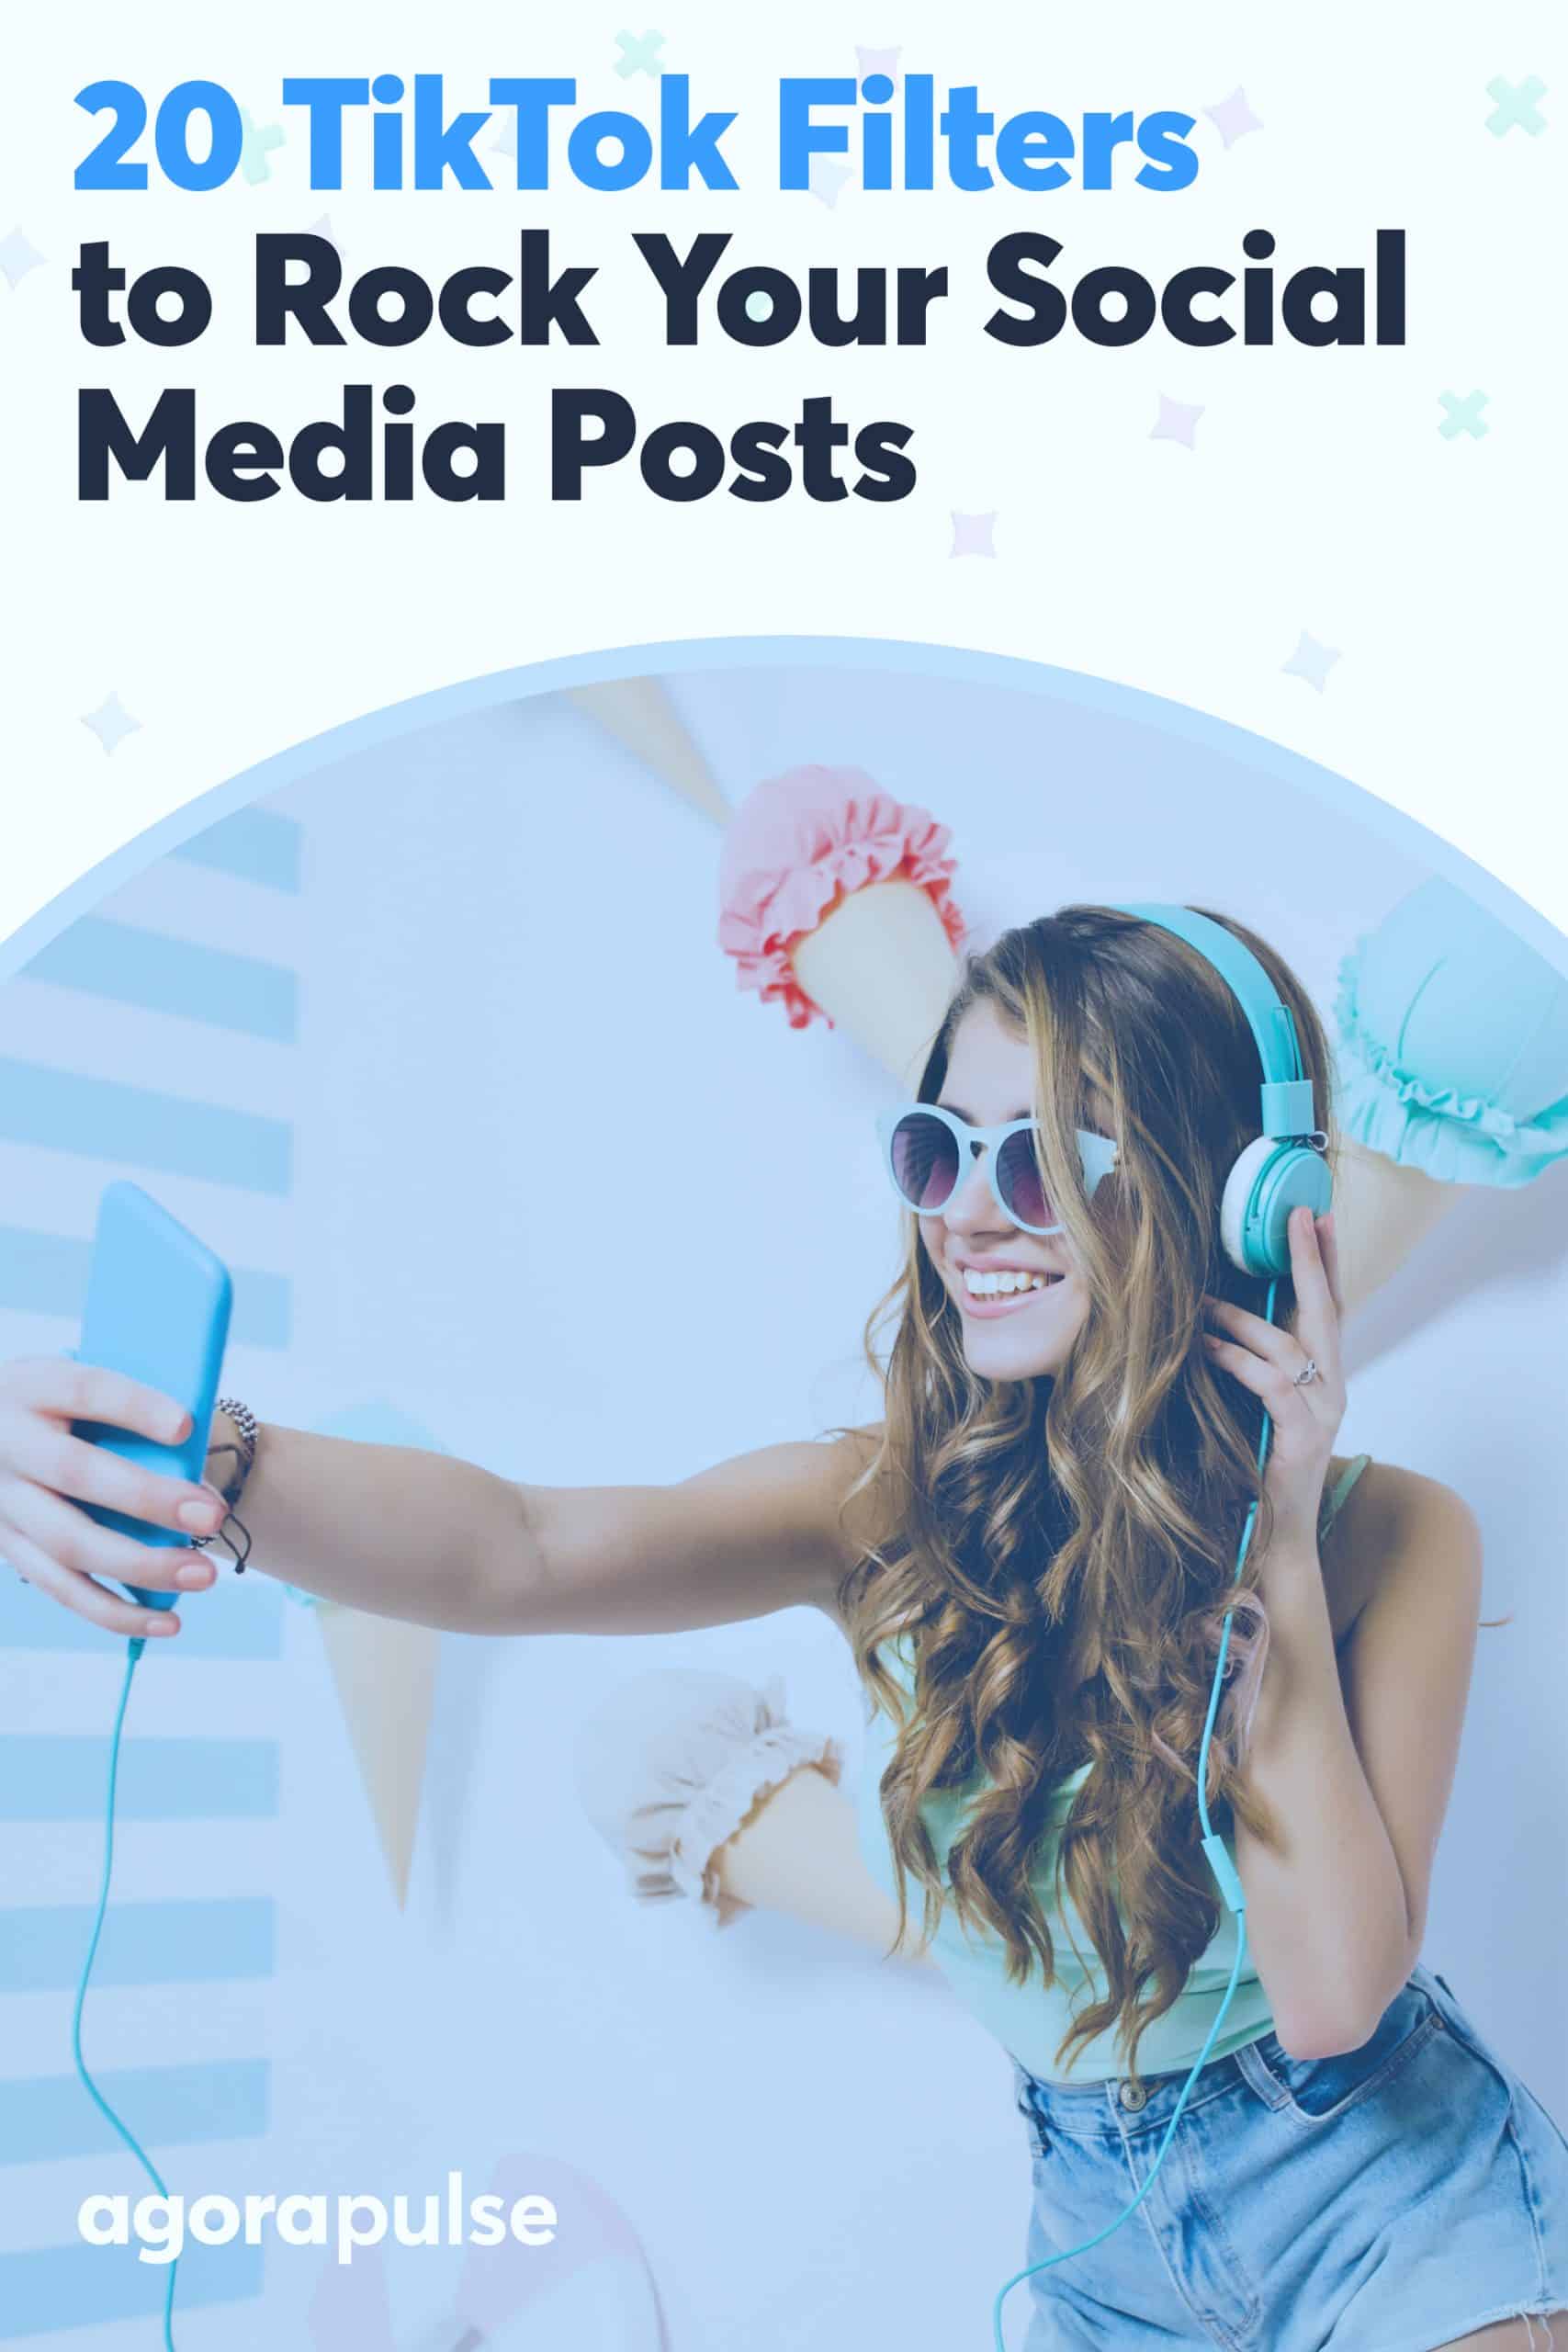 20 TikTok Filters to Rock Your Social Media Posts